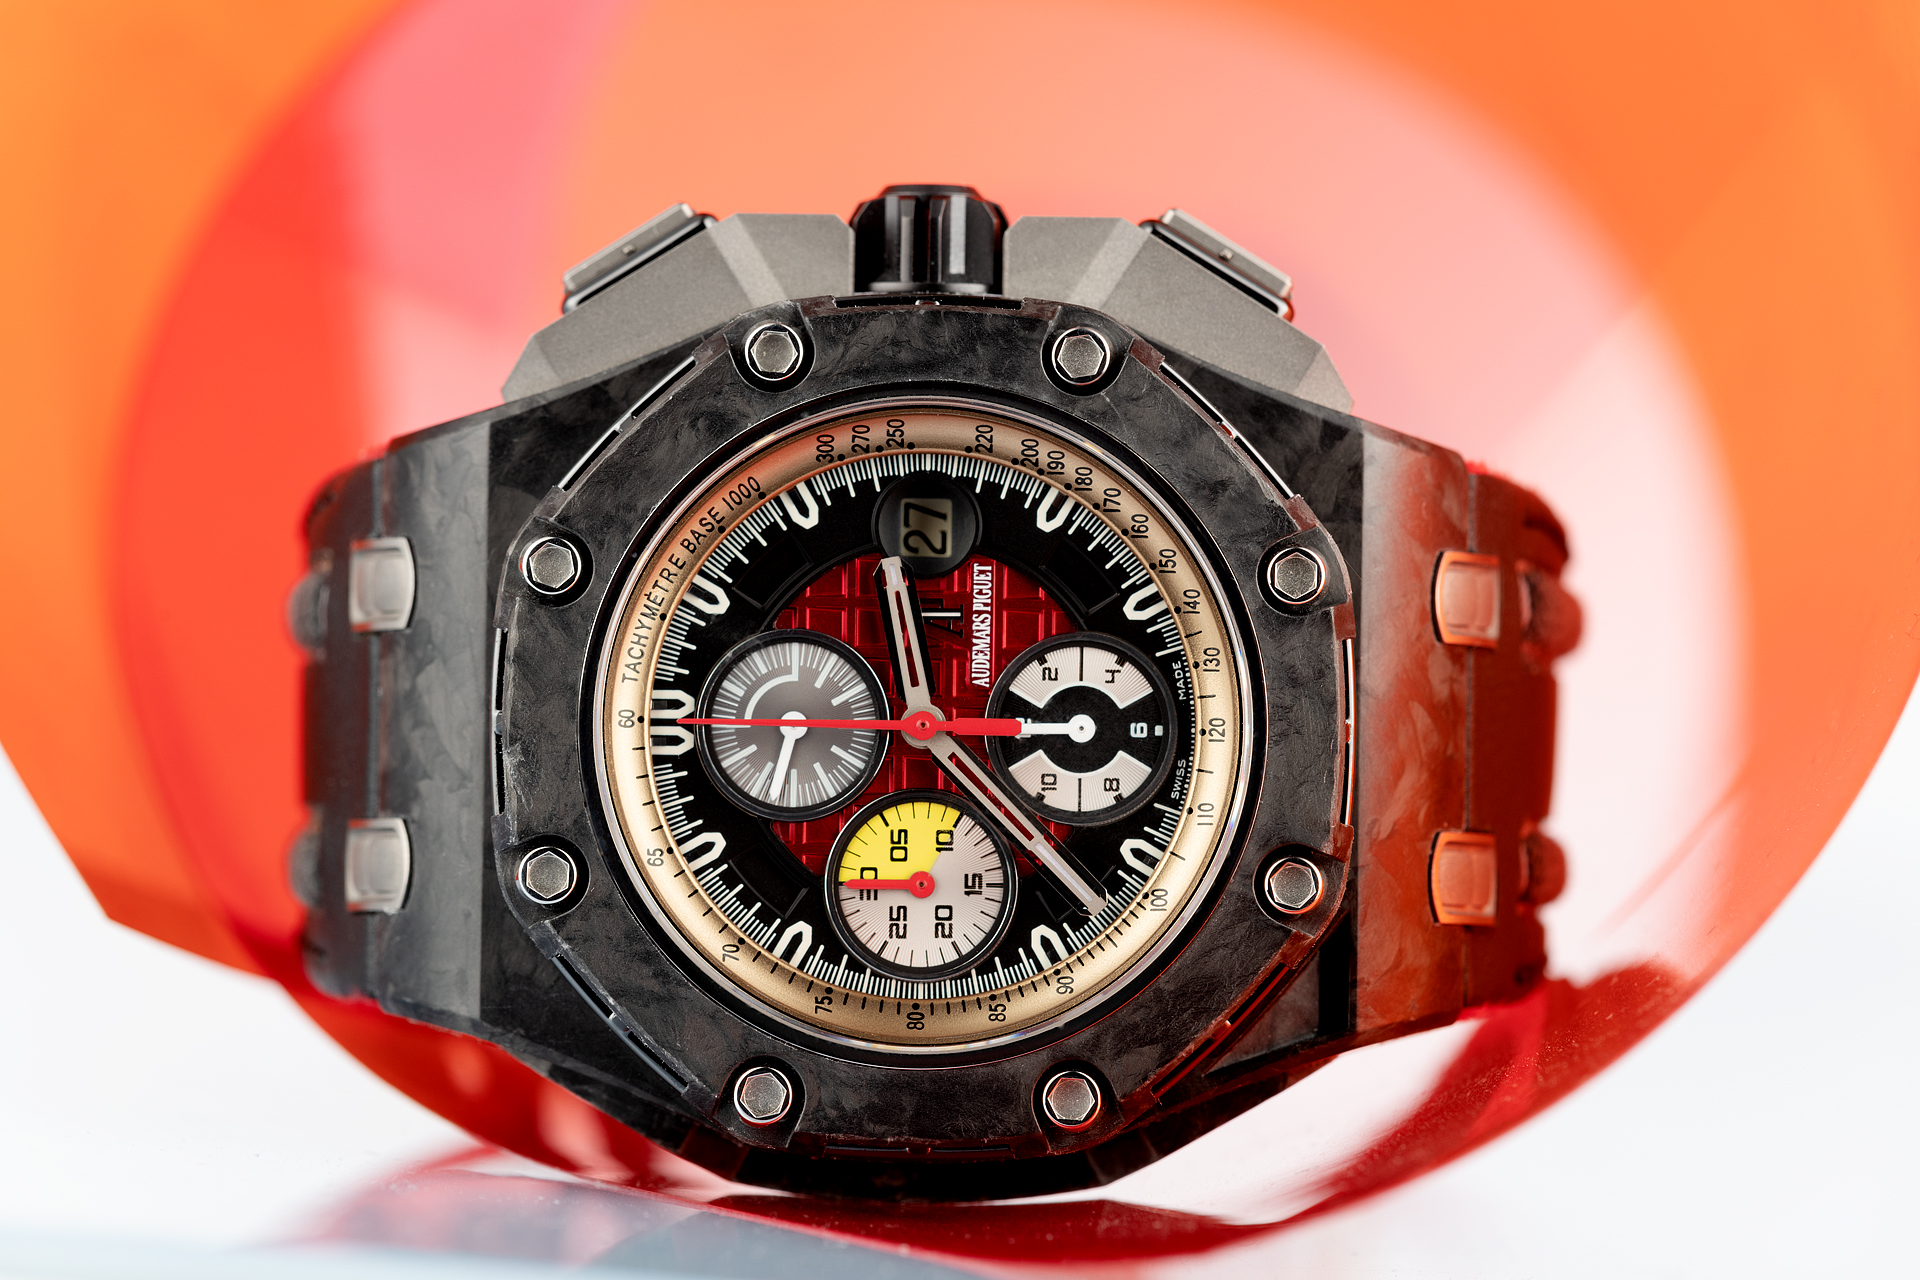 Audemars Piguet Offshore Grand Prix Watches | ref 26290IO.OO.A001VE.01 ...